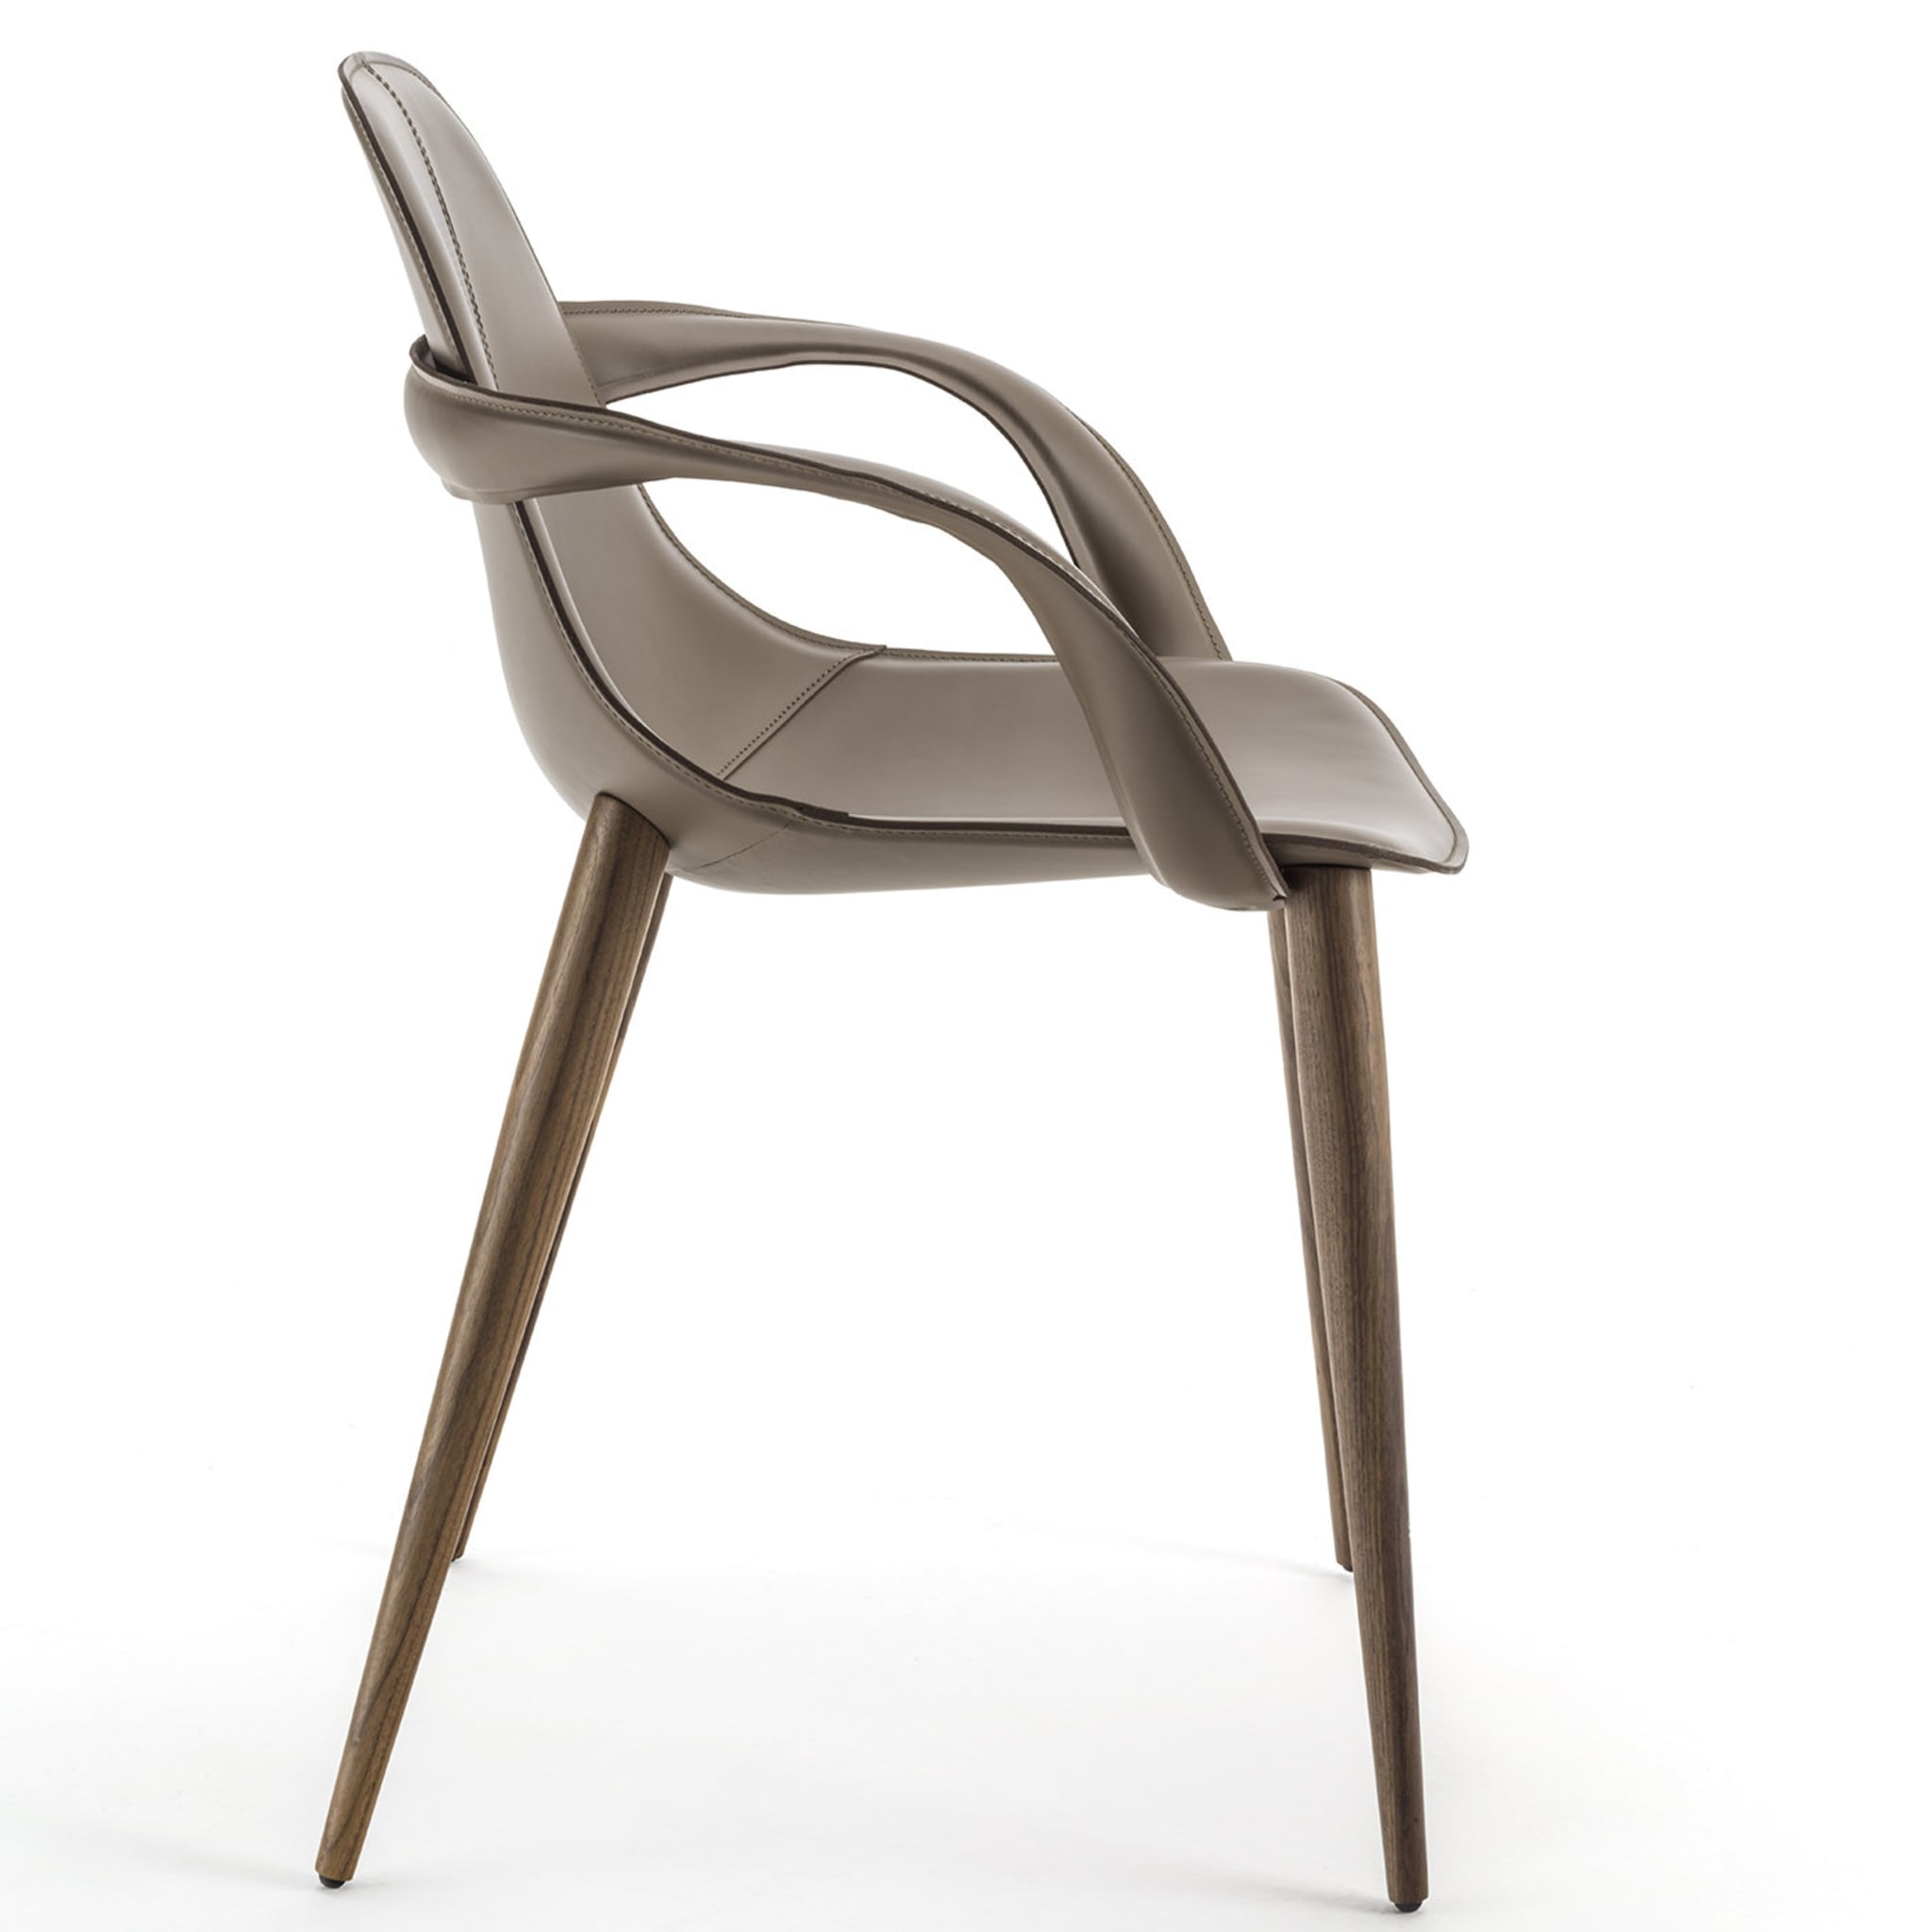 Couture Wooden-Legged Chair by Stefano Bigi - Alternative view 2